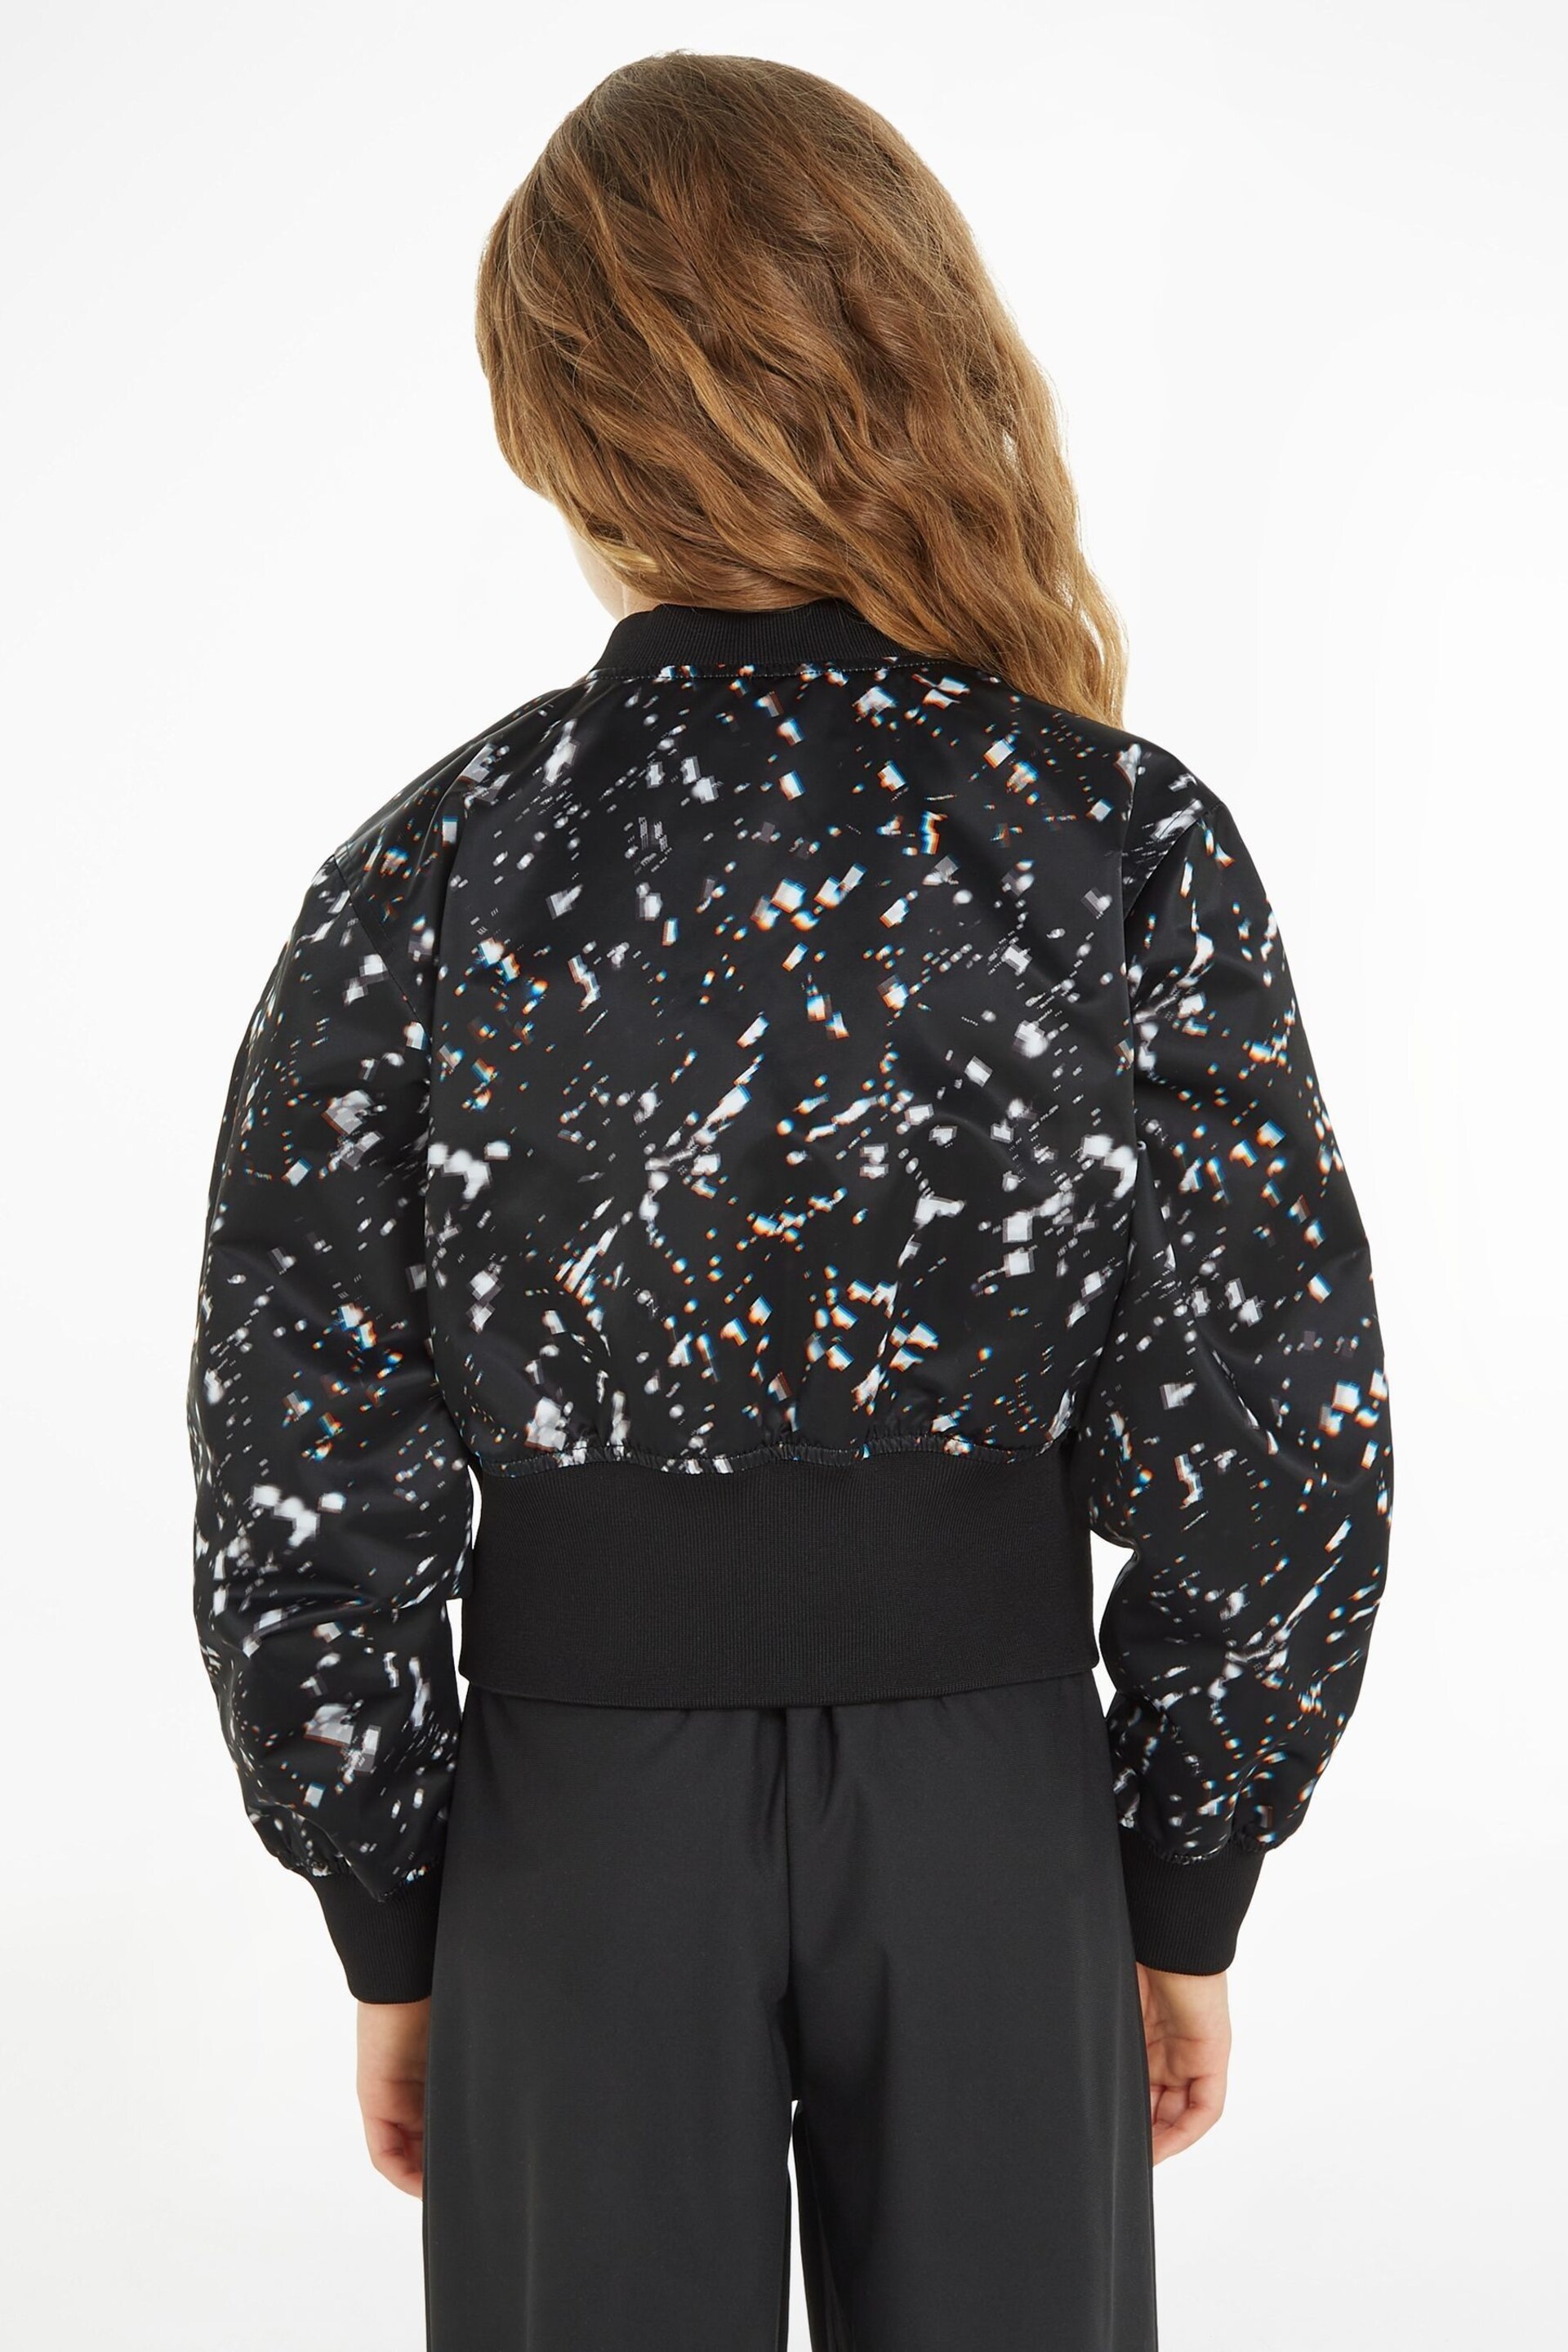 Calvin Klein Jeans Black Crystal Print Satin Bomber Jacket - Image 2 of 6